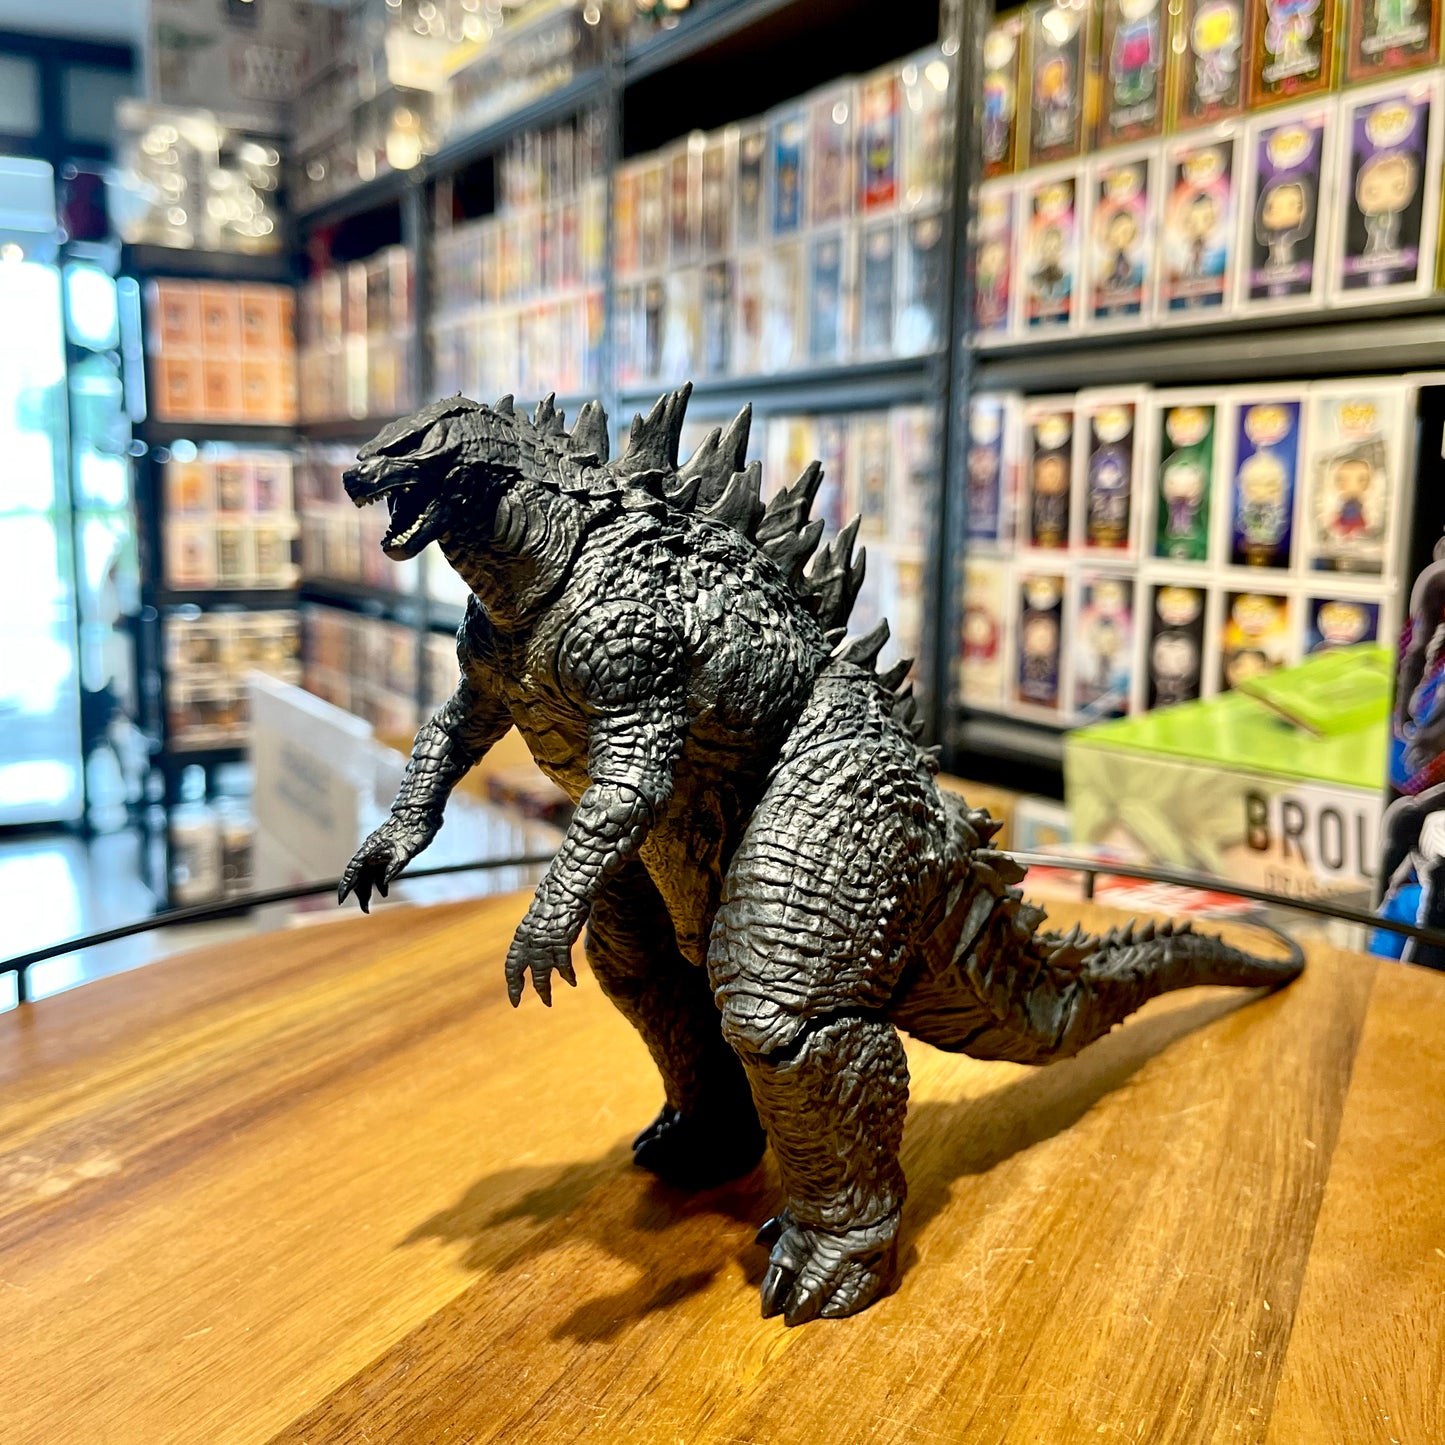 Neca Godzilla 2014 6-inch figure